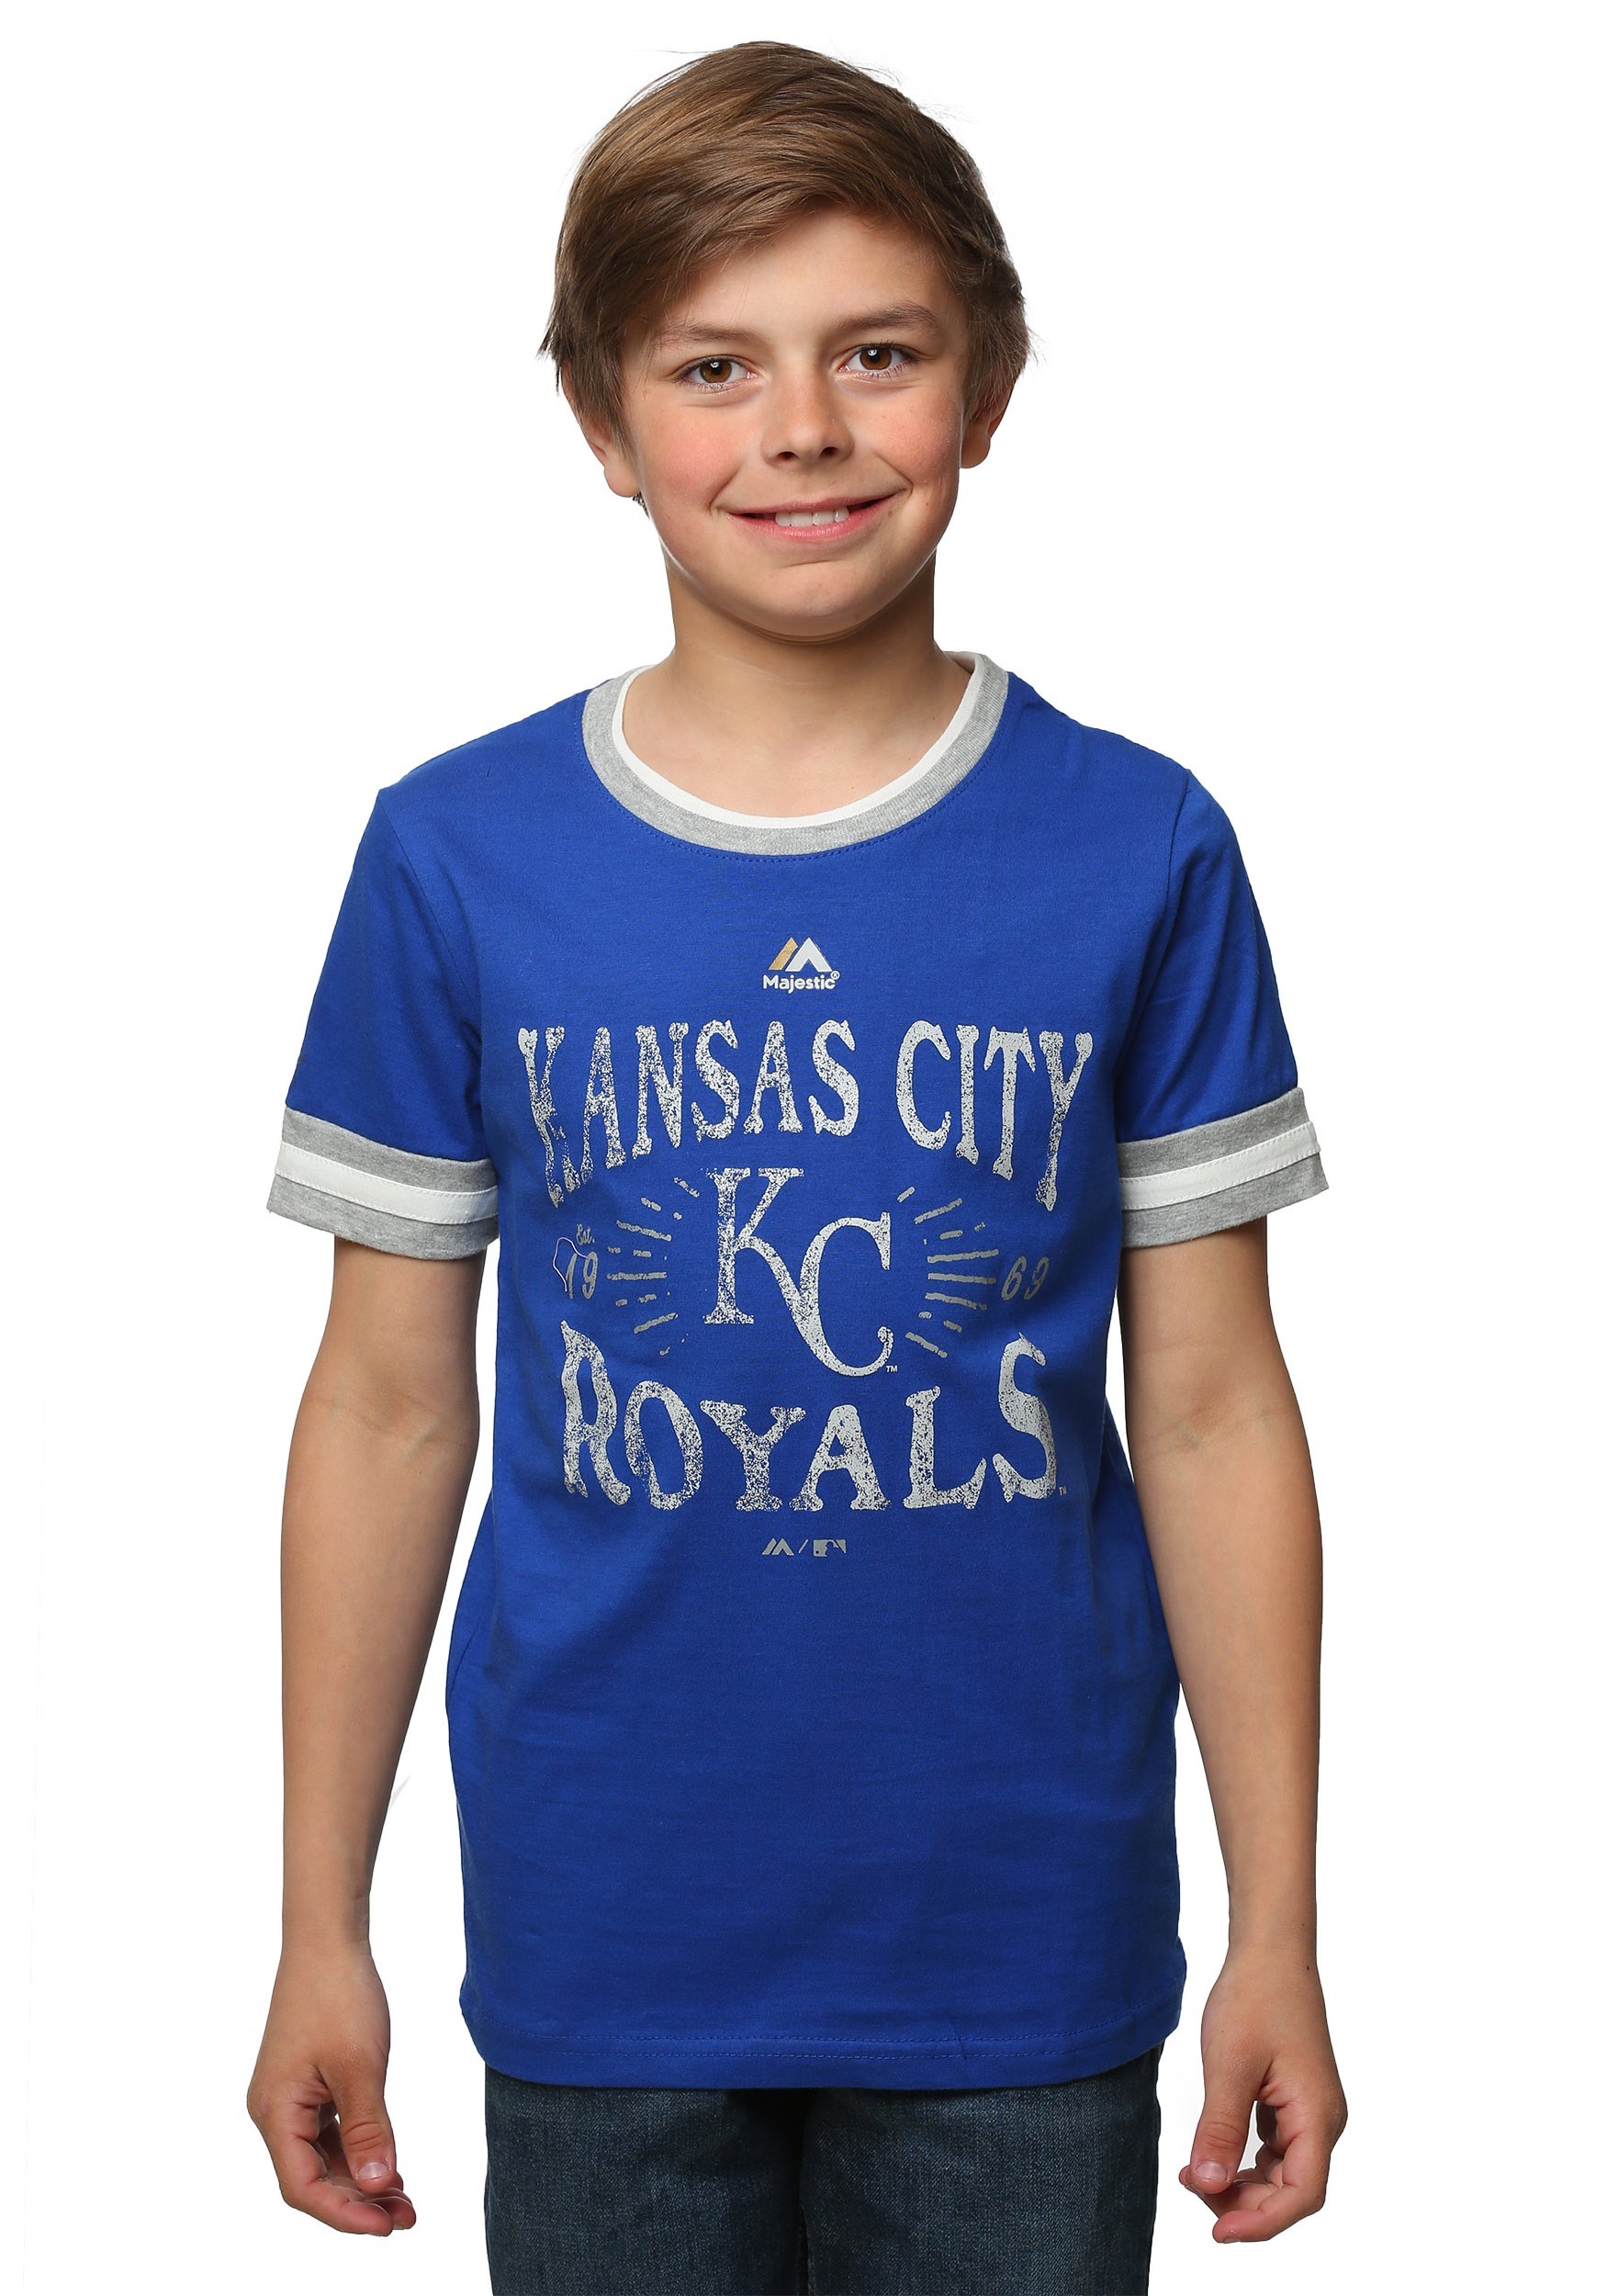 Kansas City Royals Round the Bases Kids T-Shirt